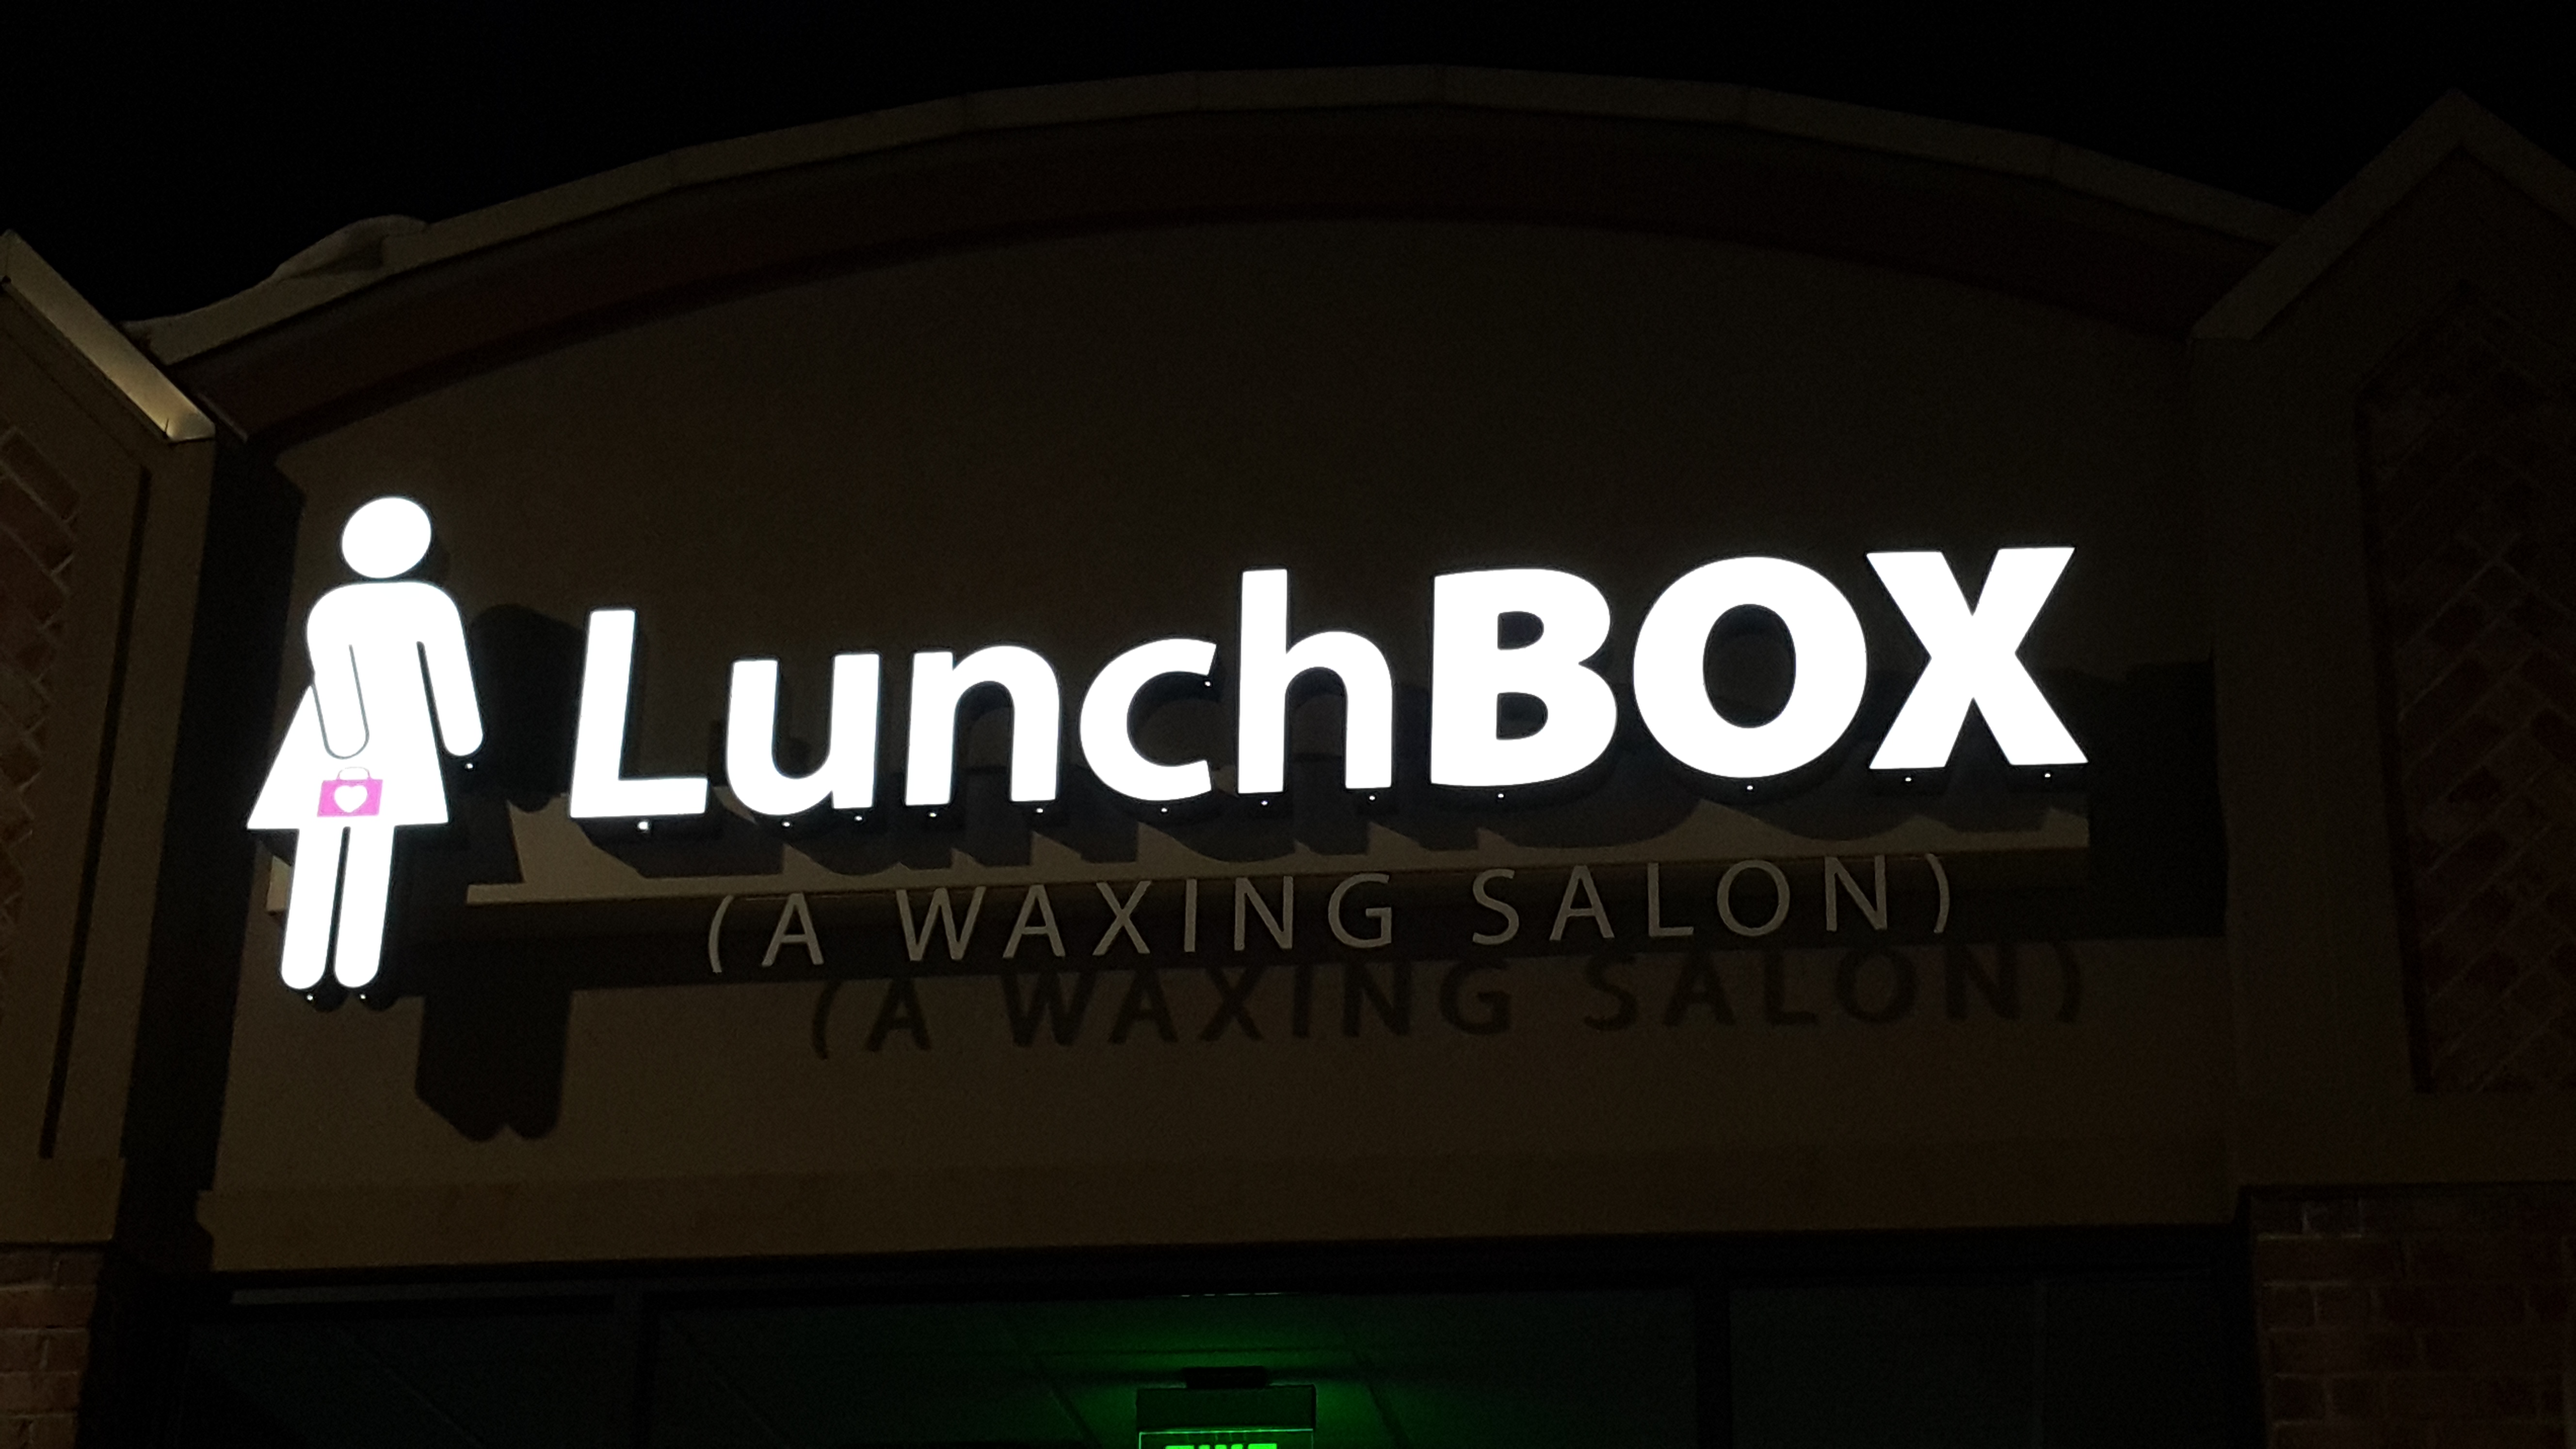 standox - LunchBOX A Waxing Salon